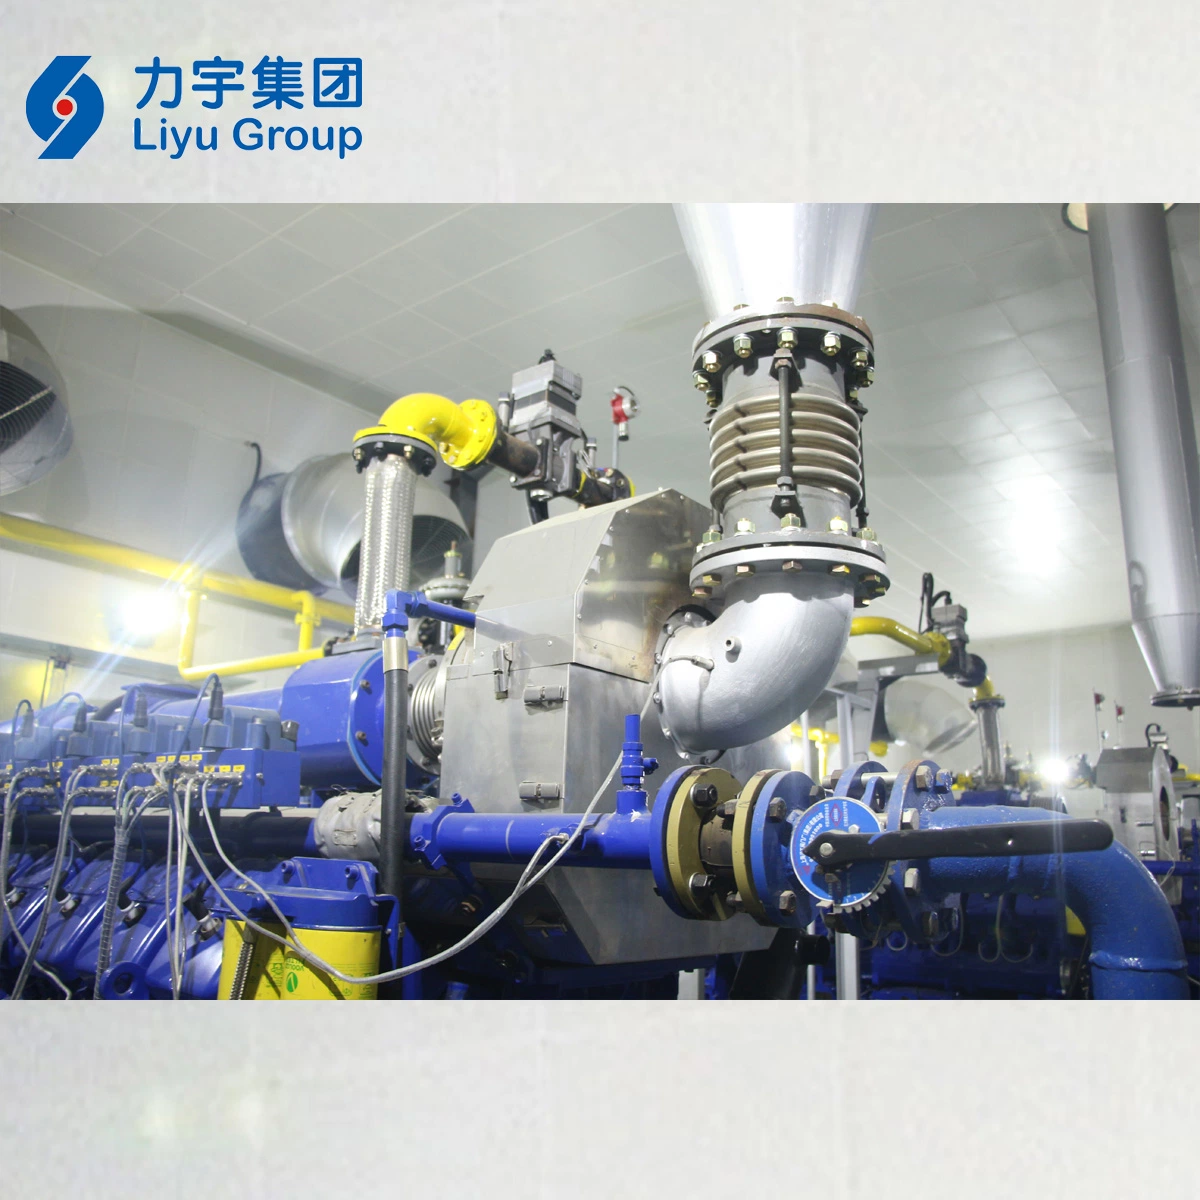 China Liyu 0.8MW/800kw High Voltage Gas-Fired Internal Combustion Engine Energy Saving Biomass Gas Powerd Generator Set Manufacturer